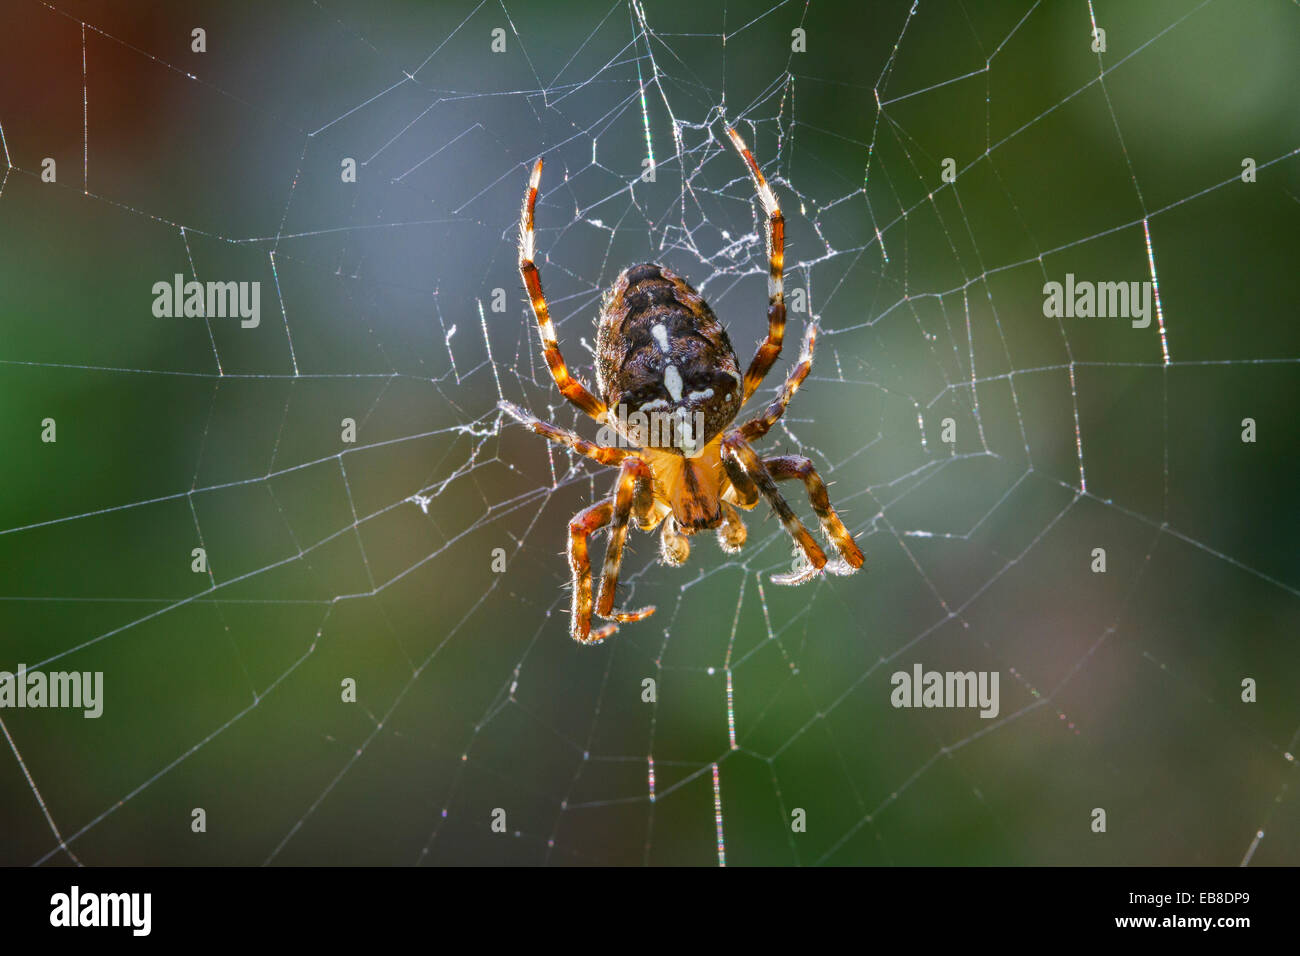 Giardino europeo spider / diadema spider / cross spider / cross orbweaver (Araneus diadematus) nel web Foto Stock